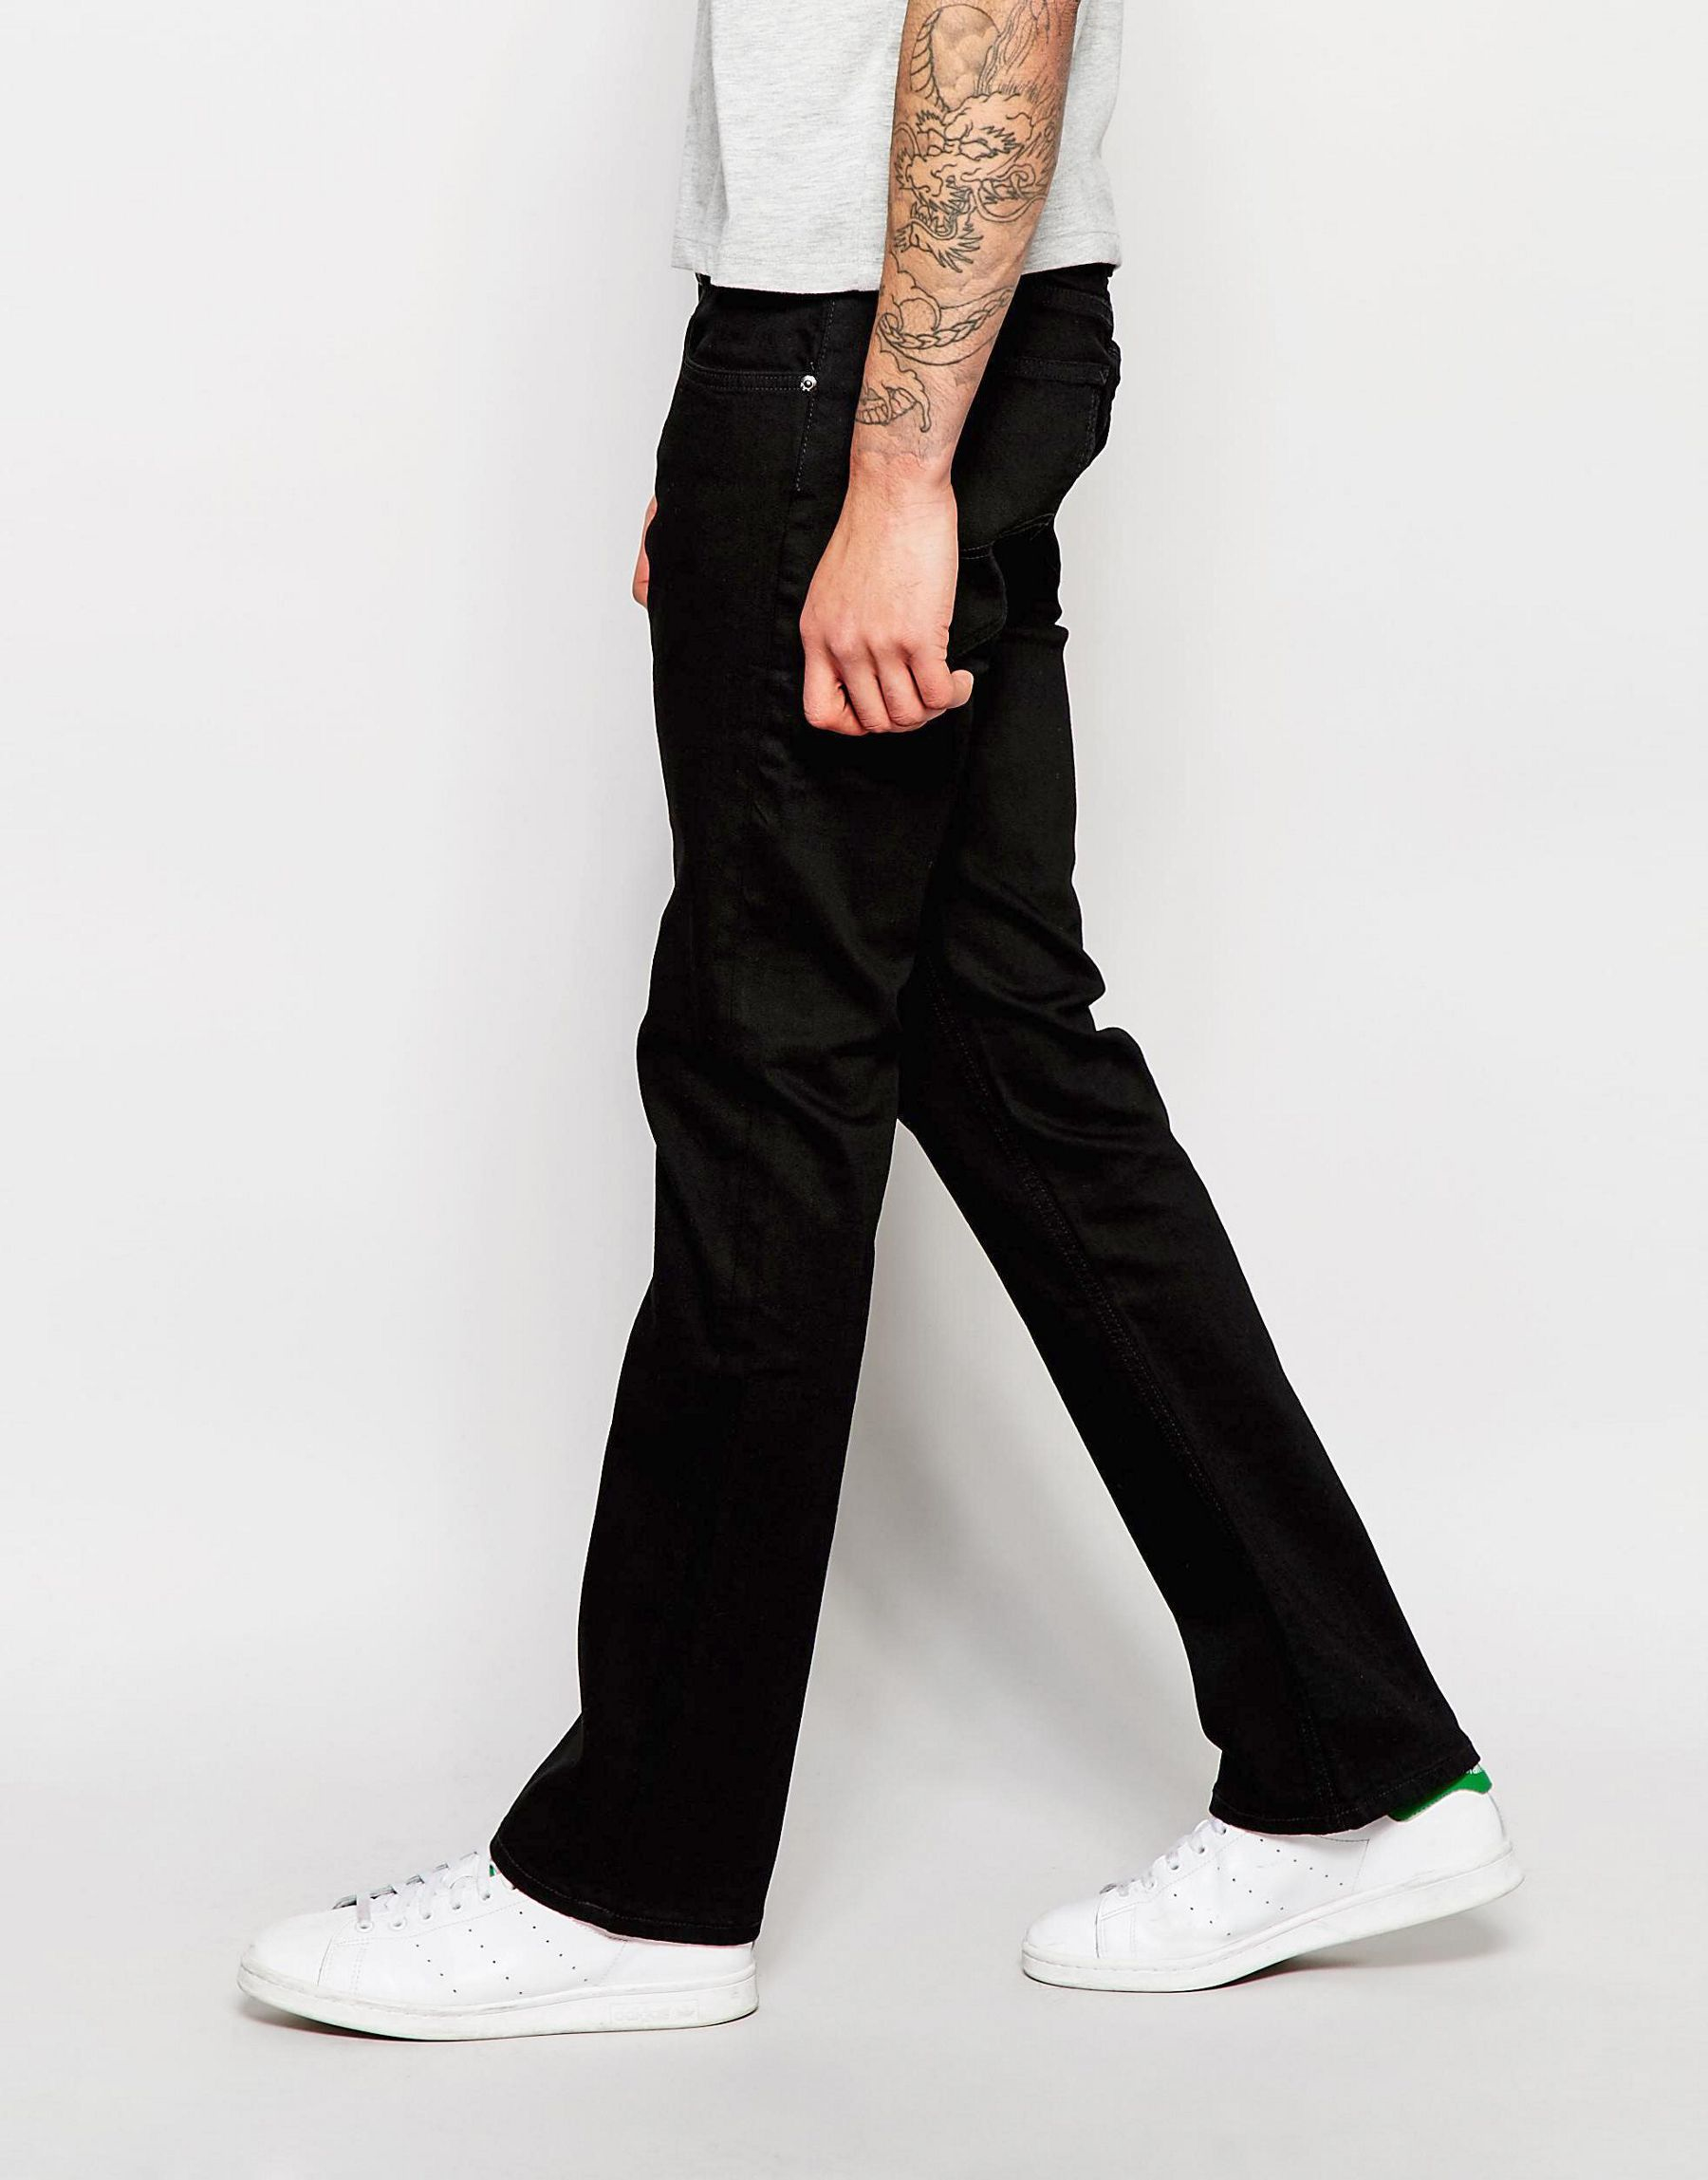 Lee Jeans Denim Jeans Trenton Stretch Slim Bootcut Fit Clean Black - Black  for Men - Lyst